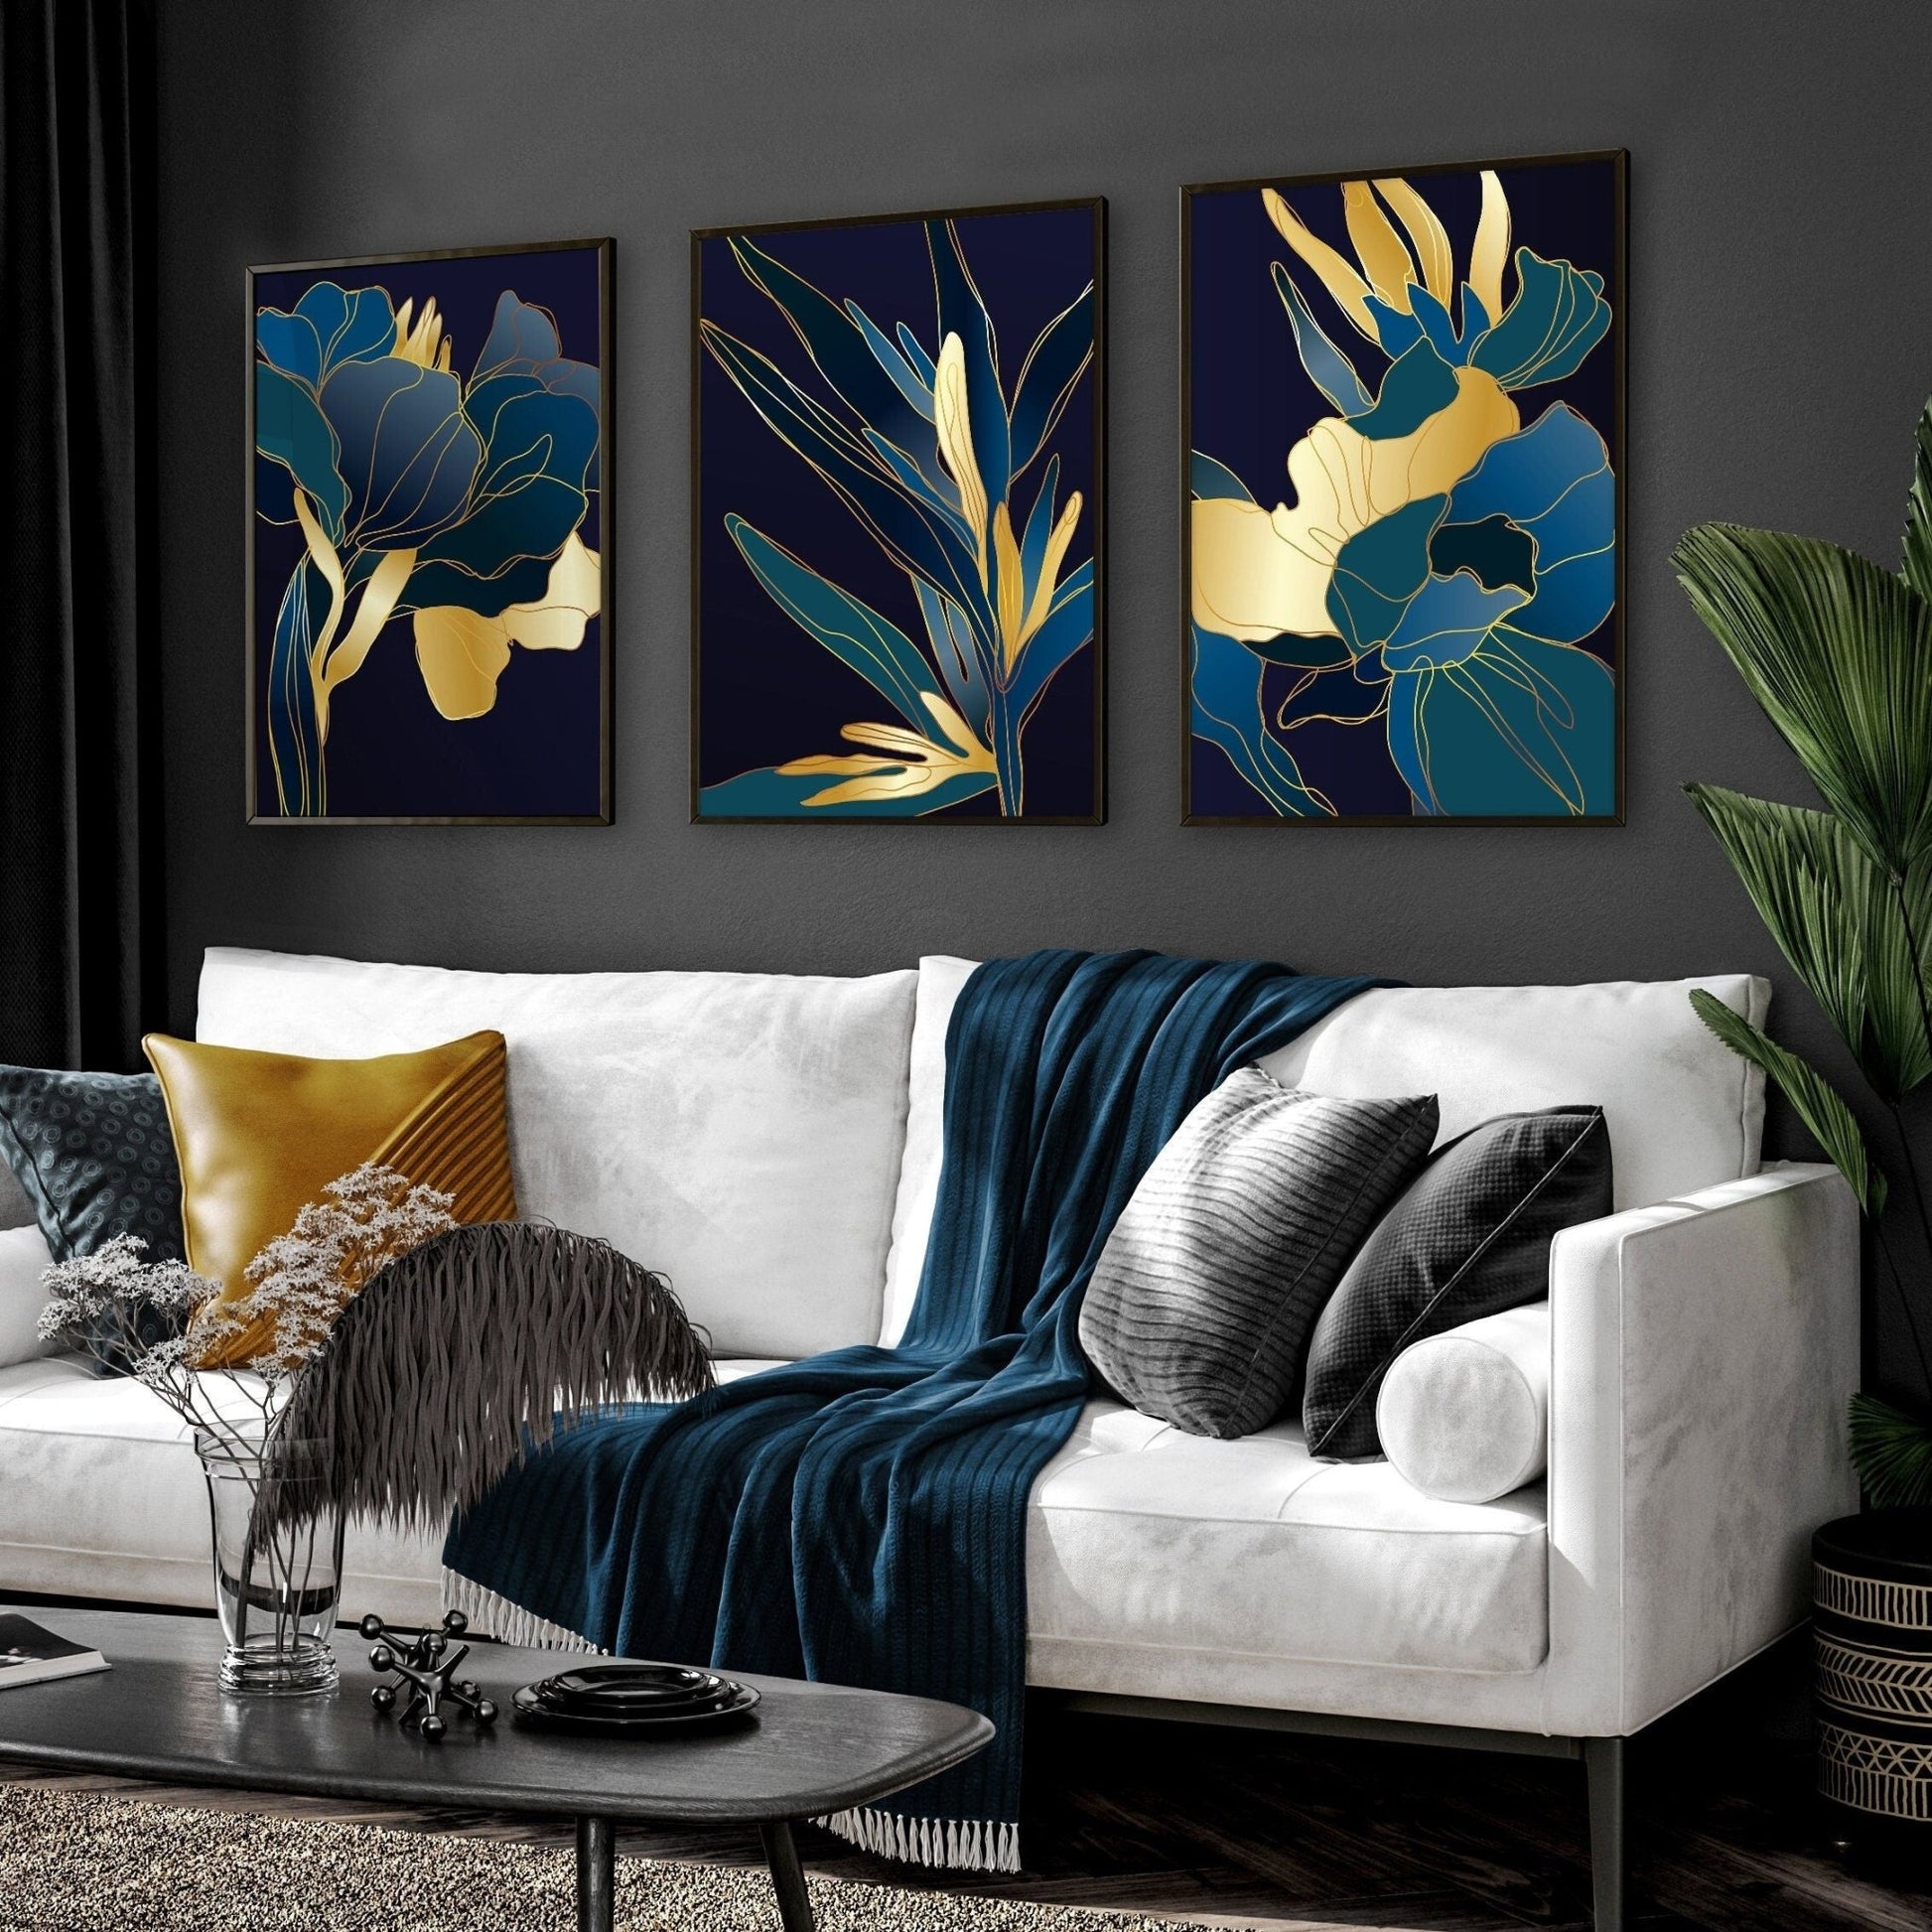 Teal living room artwork | set of 3 wall art prints - About Wall Art